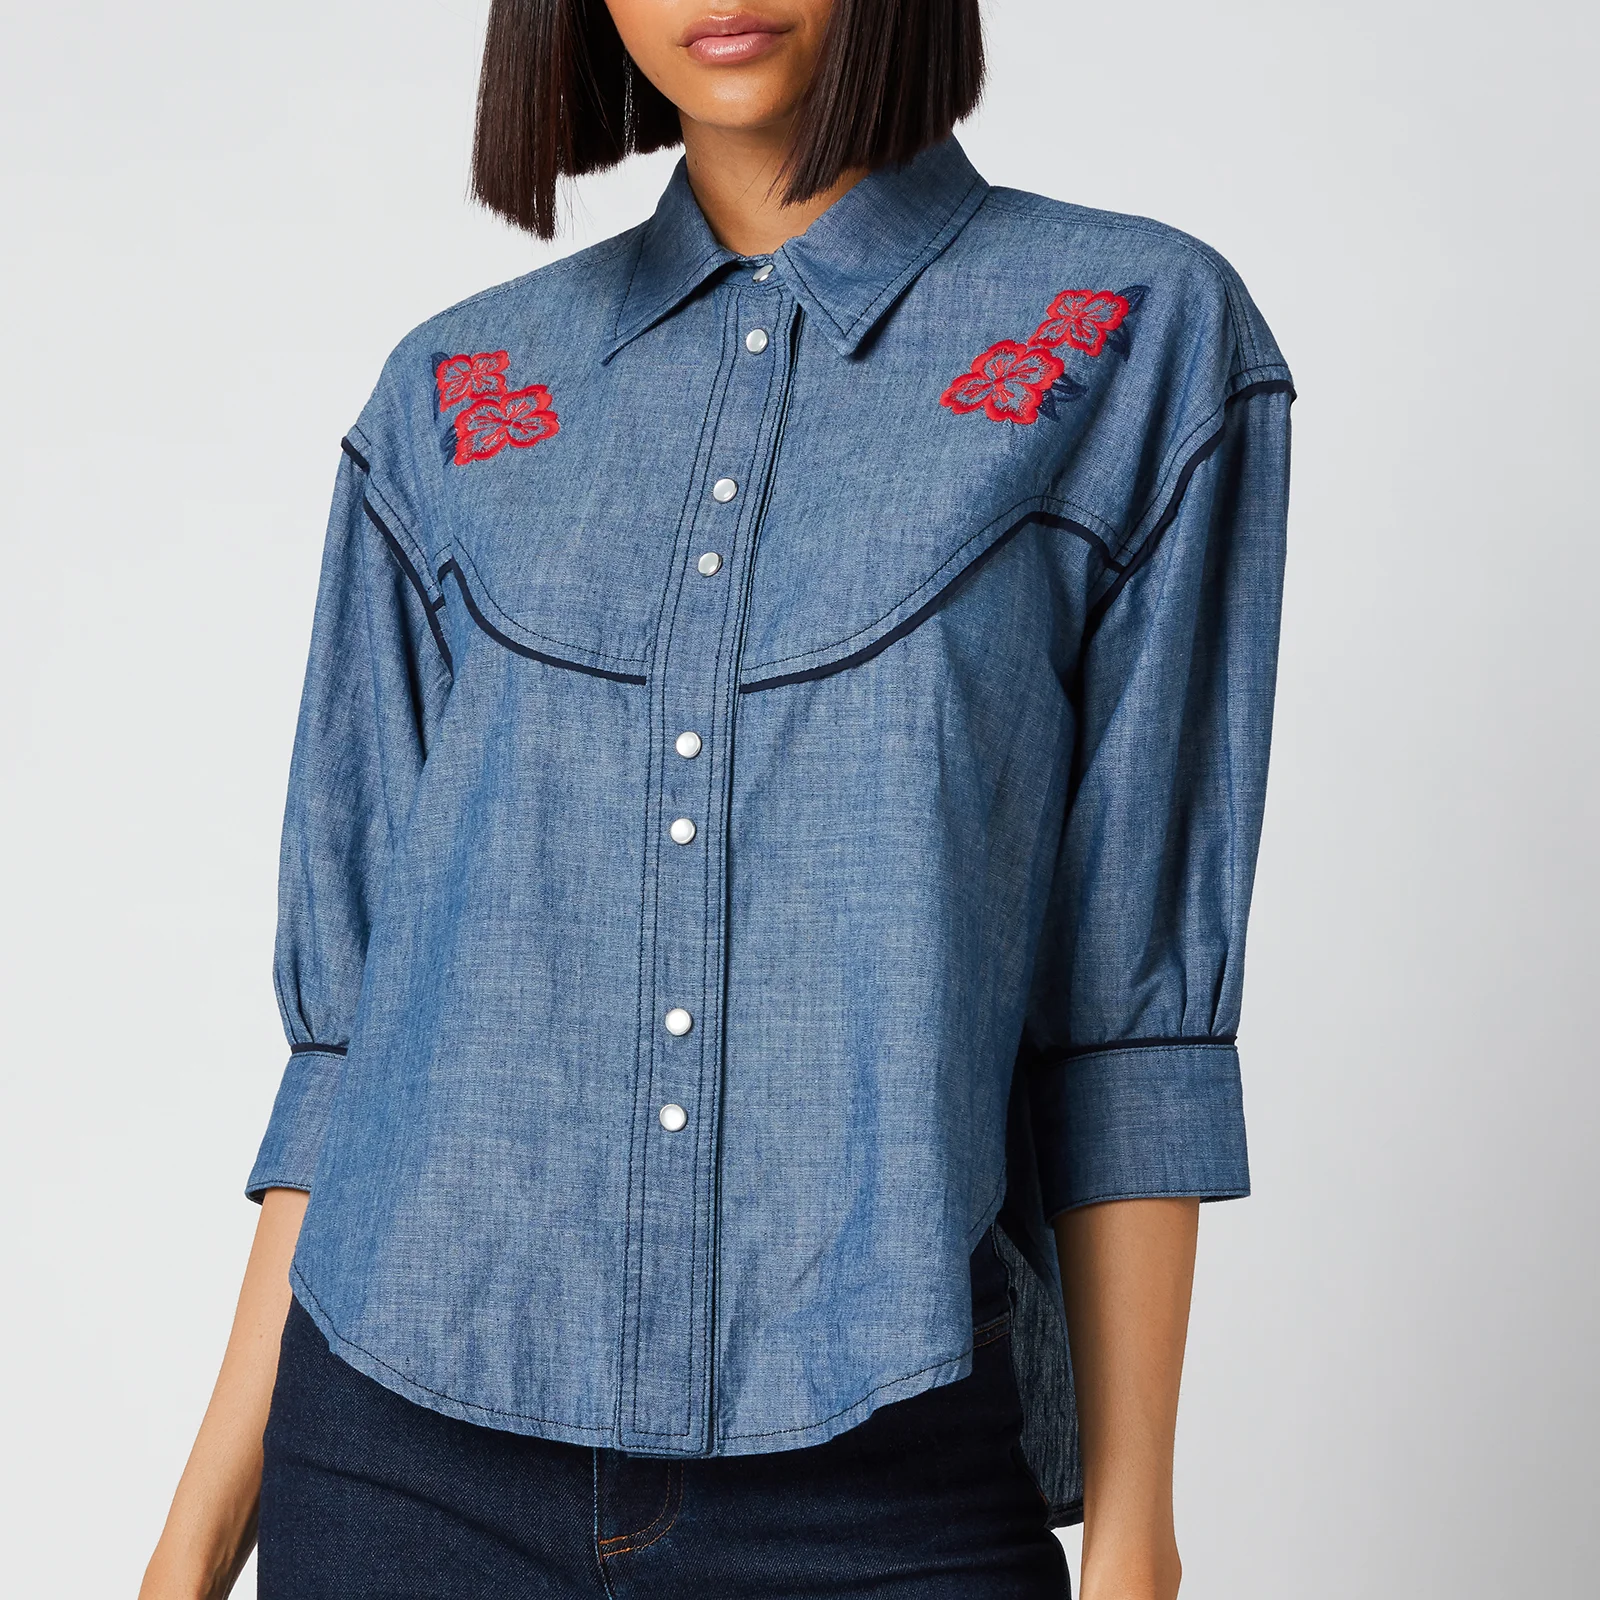 See by Chloé Women's Chambray Frill Collar Shirt - Faded Indigo Image 1